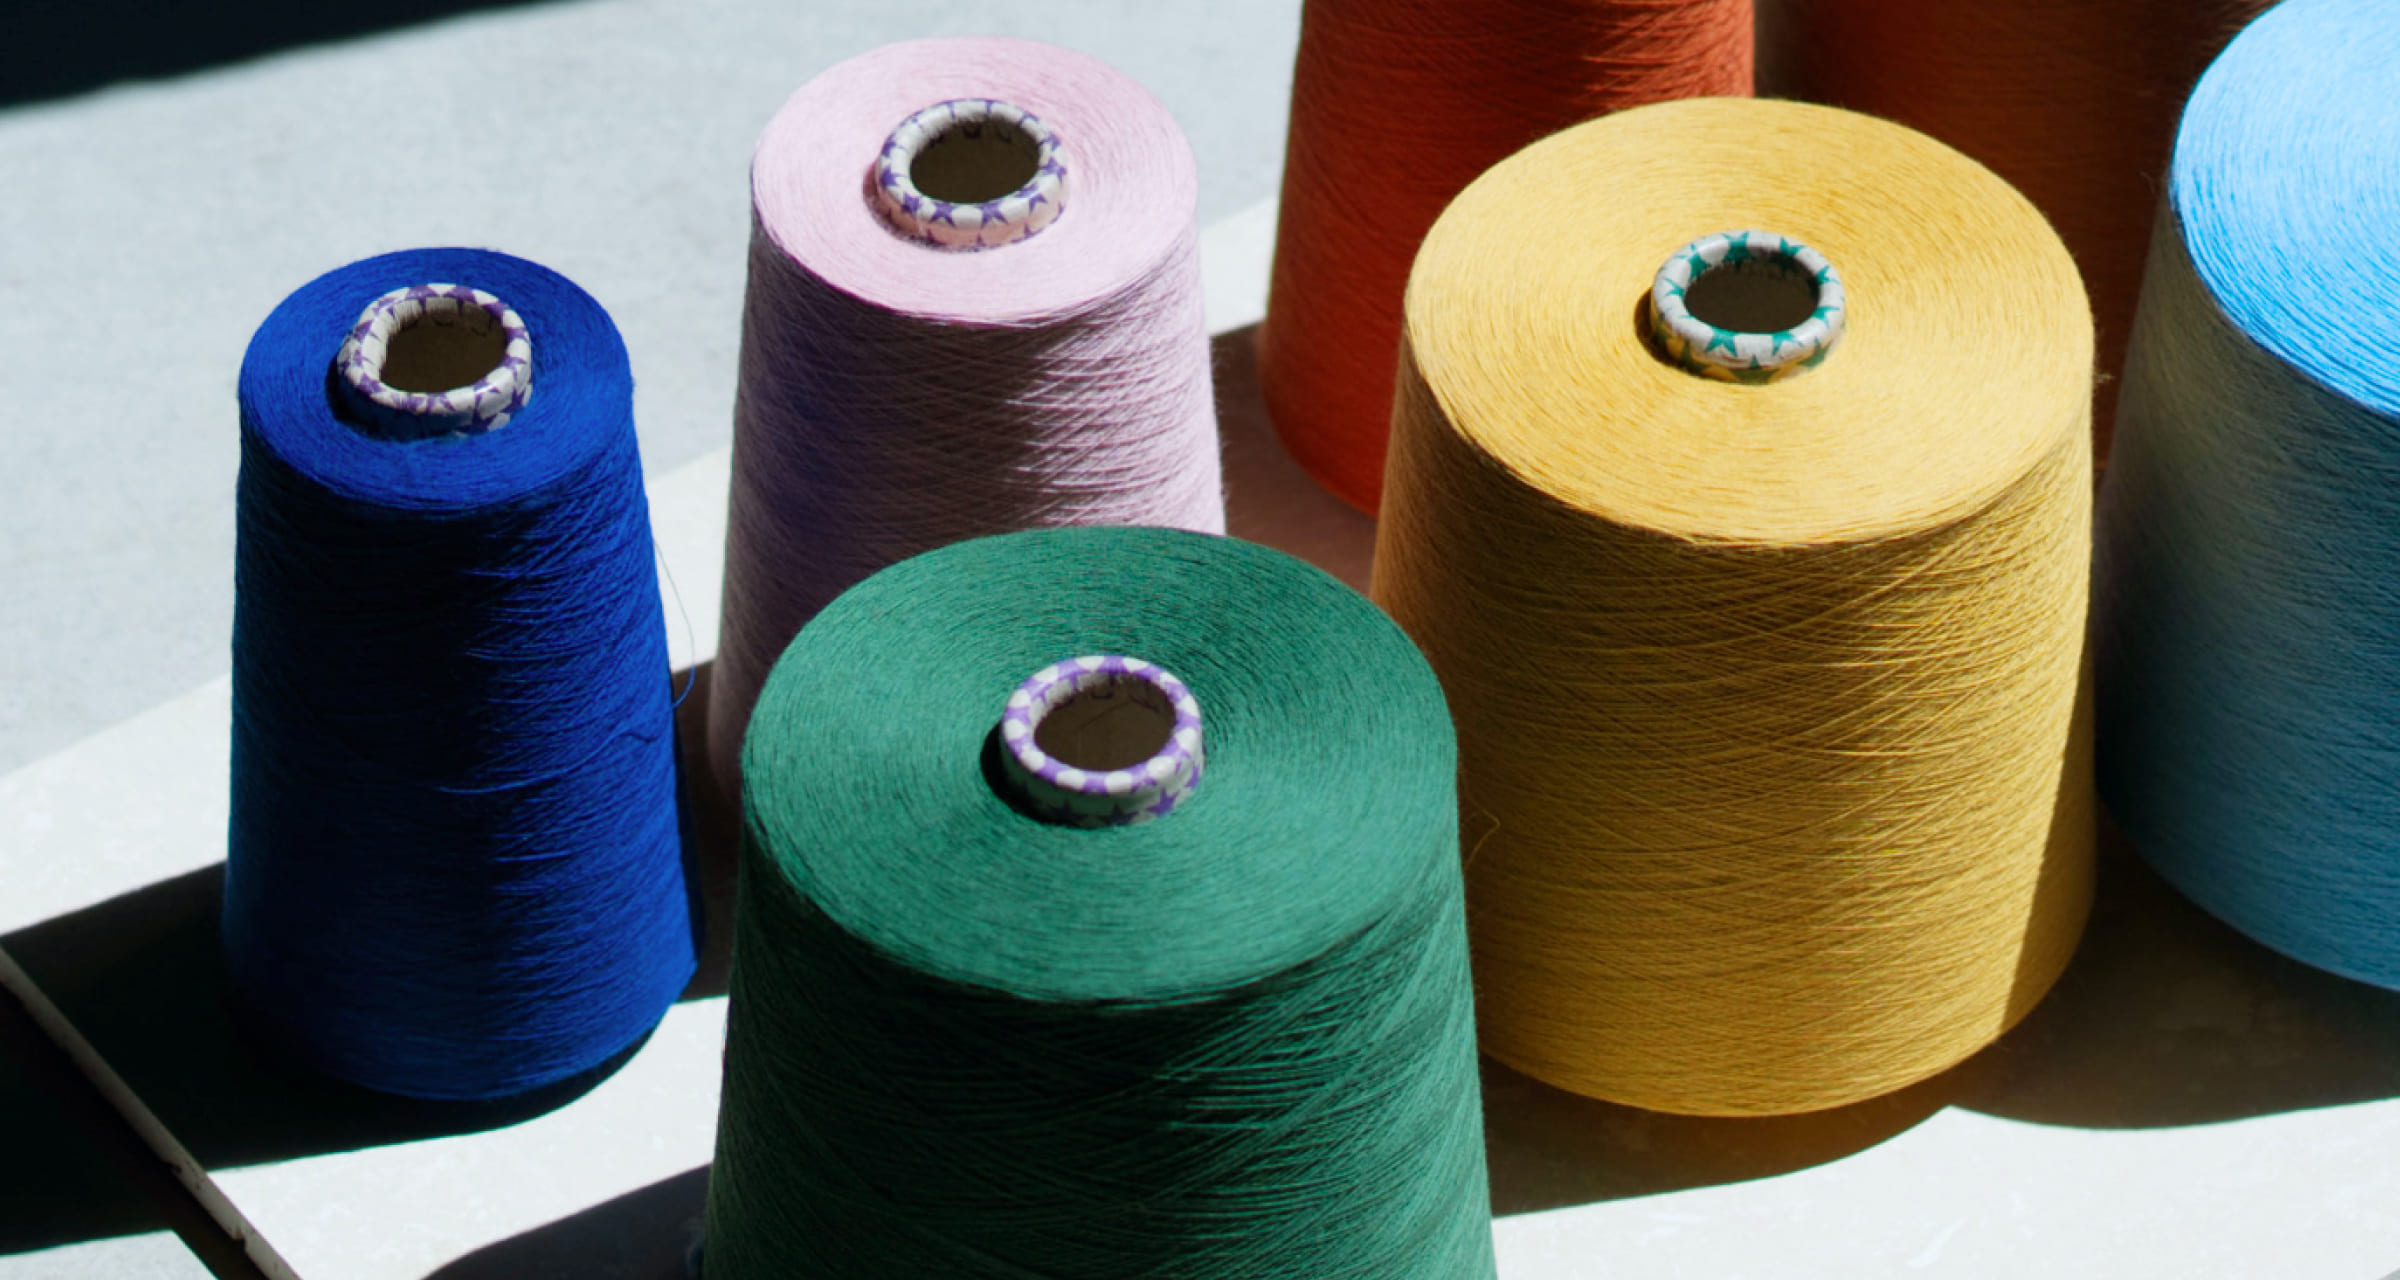 Реалити-шоу производителя домашнего текстиля: «Производство оказалось не готово к резкому росту»